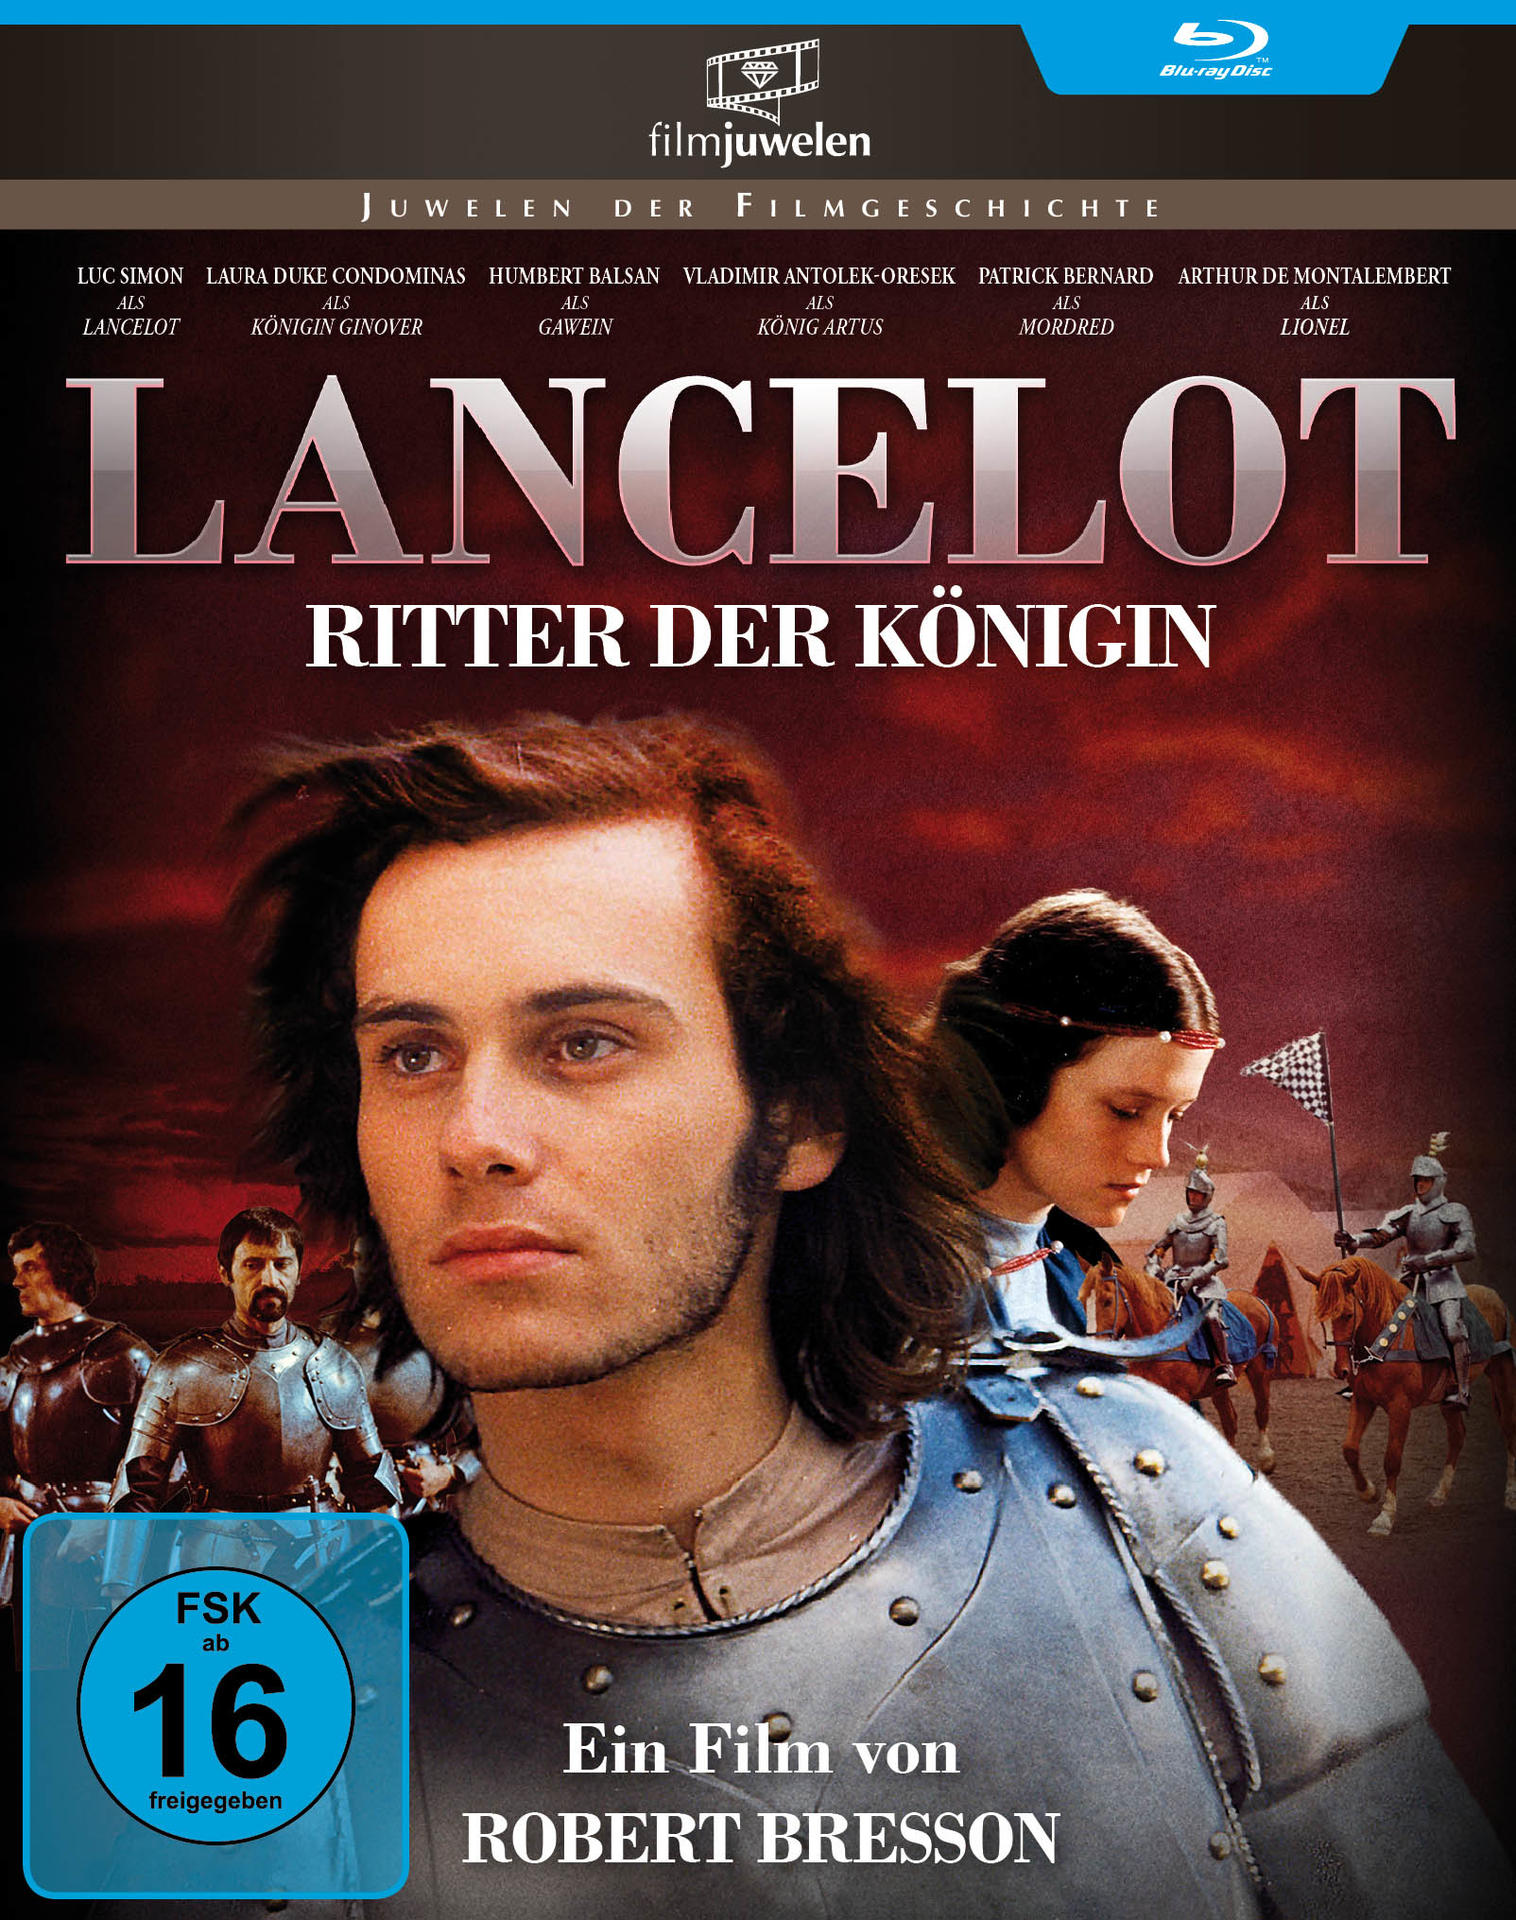 Blu-ray Lancelot, der Königin Ritter